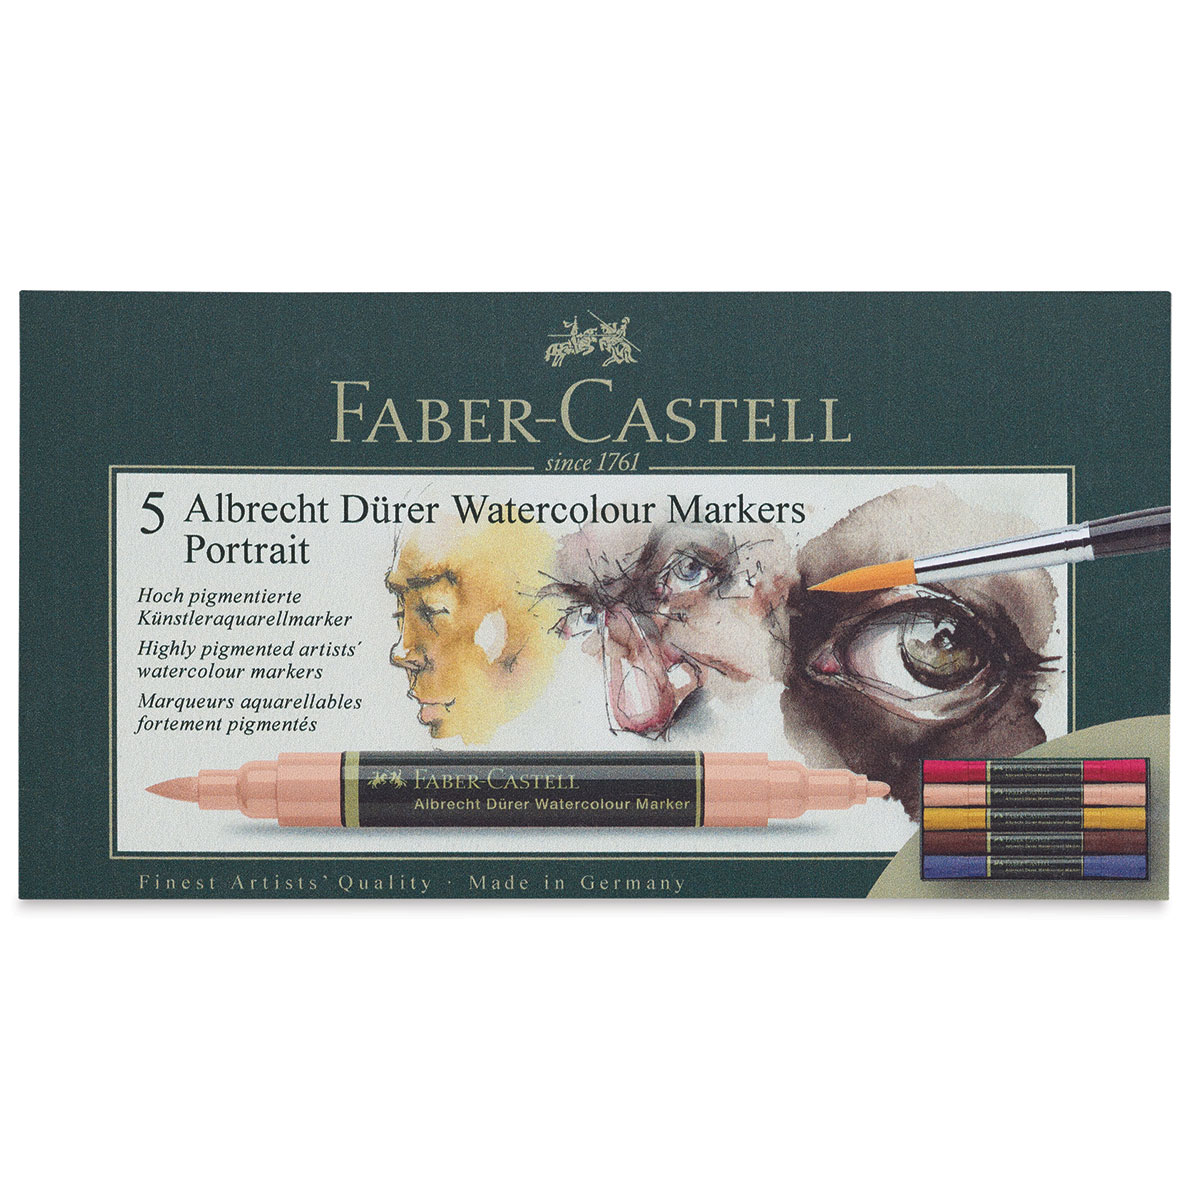 REVIEW-Faber-Castell's Albrecht Durer Watercolor Markers 